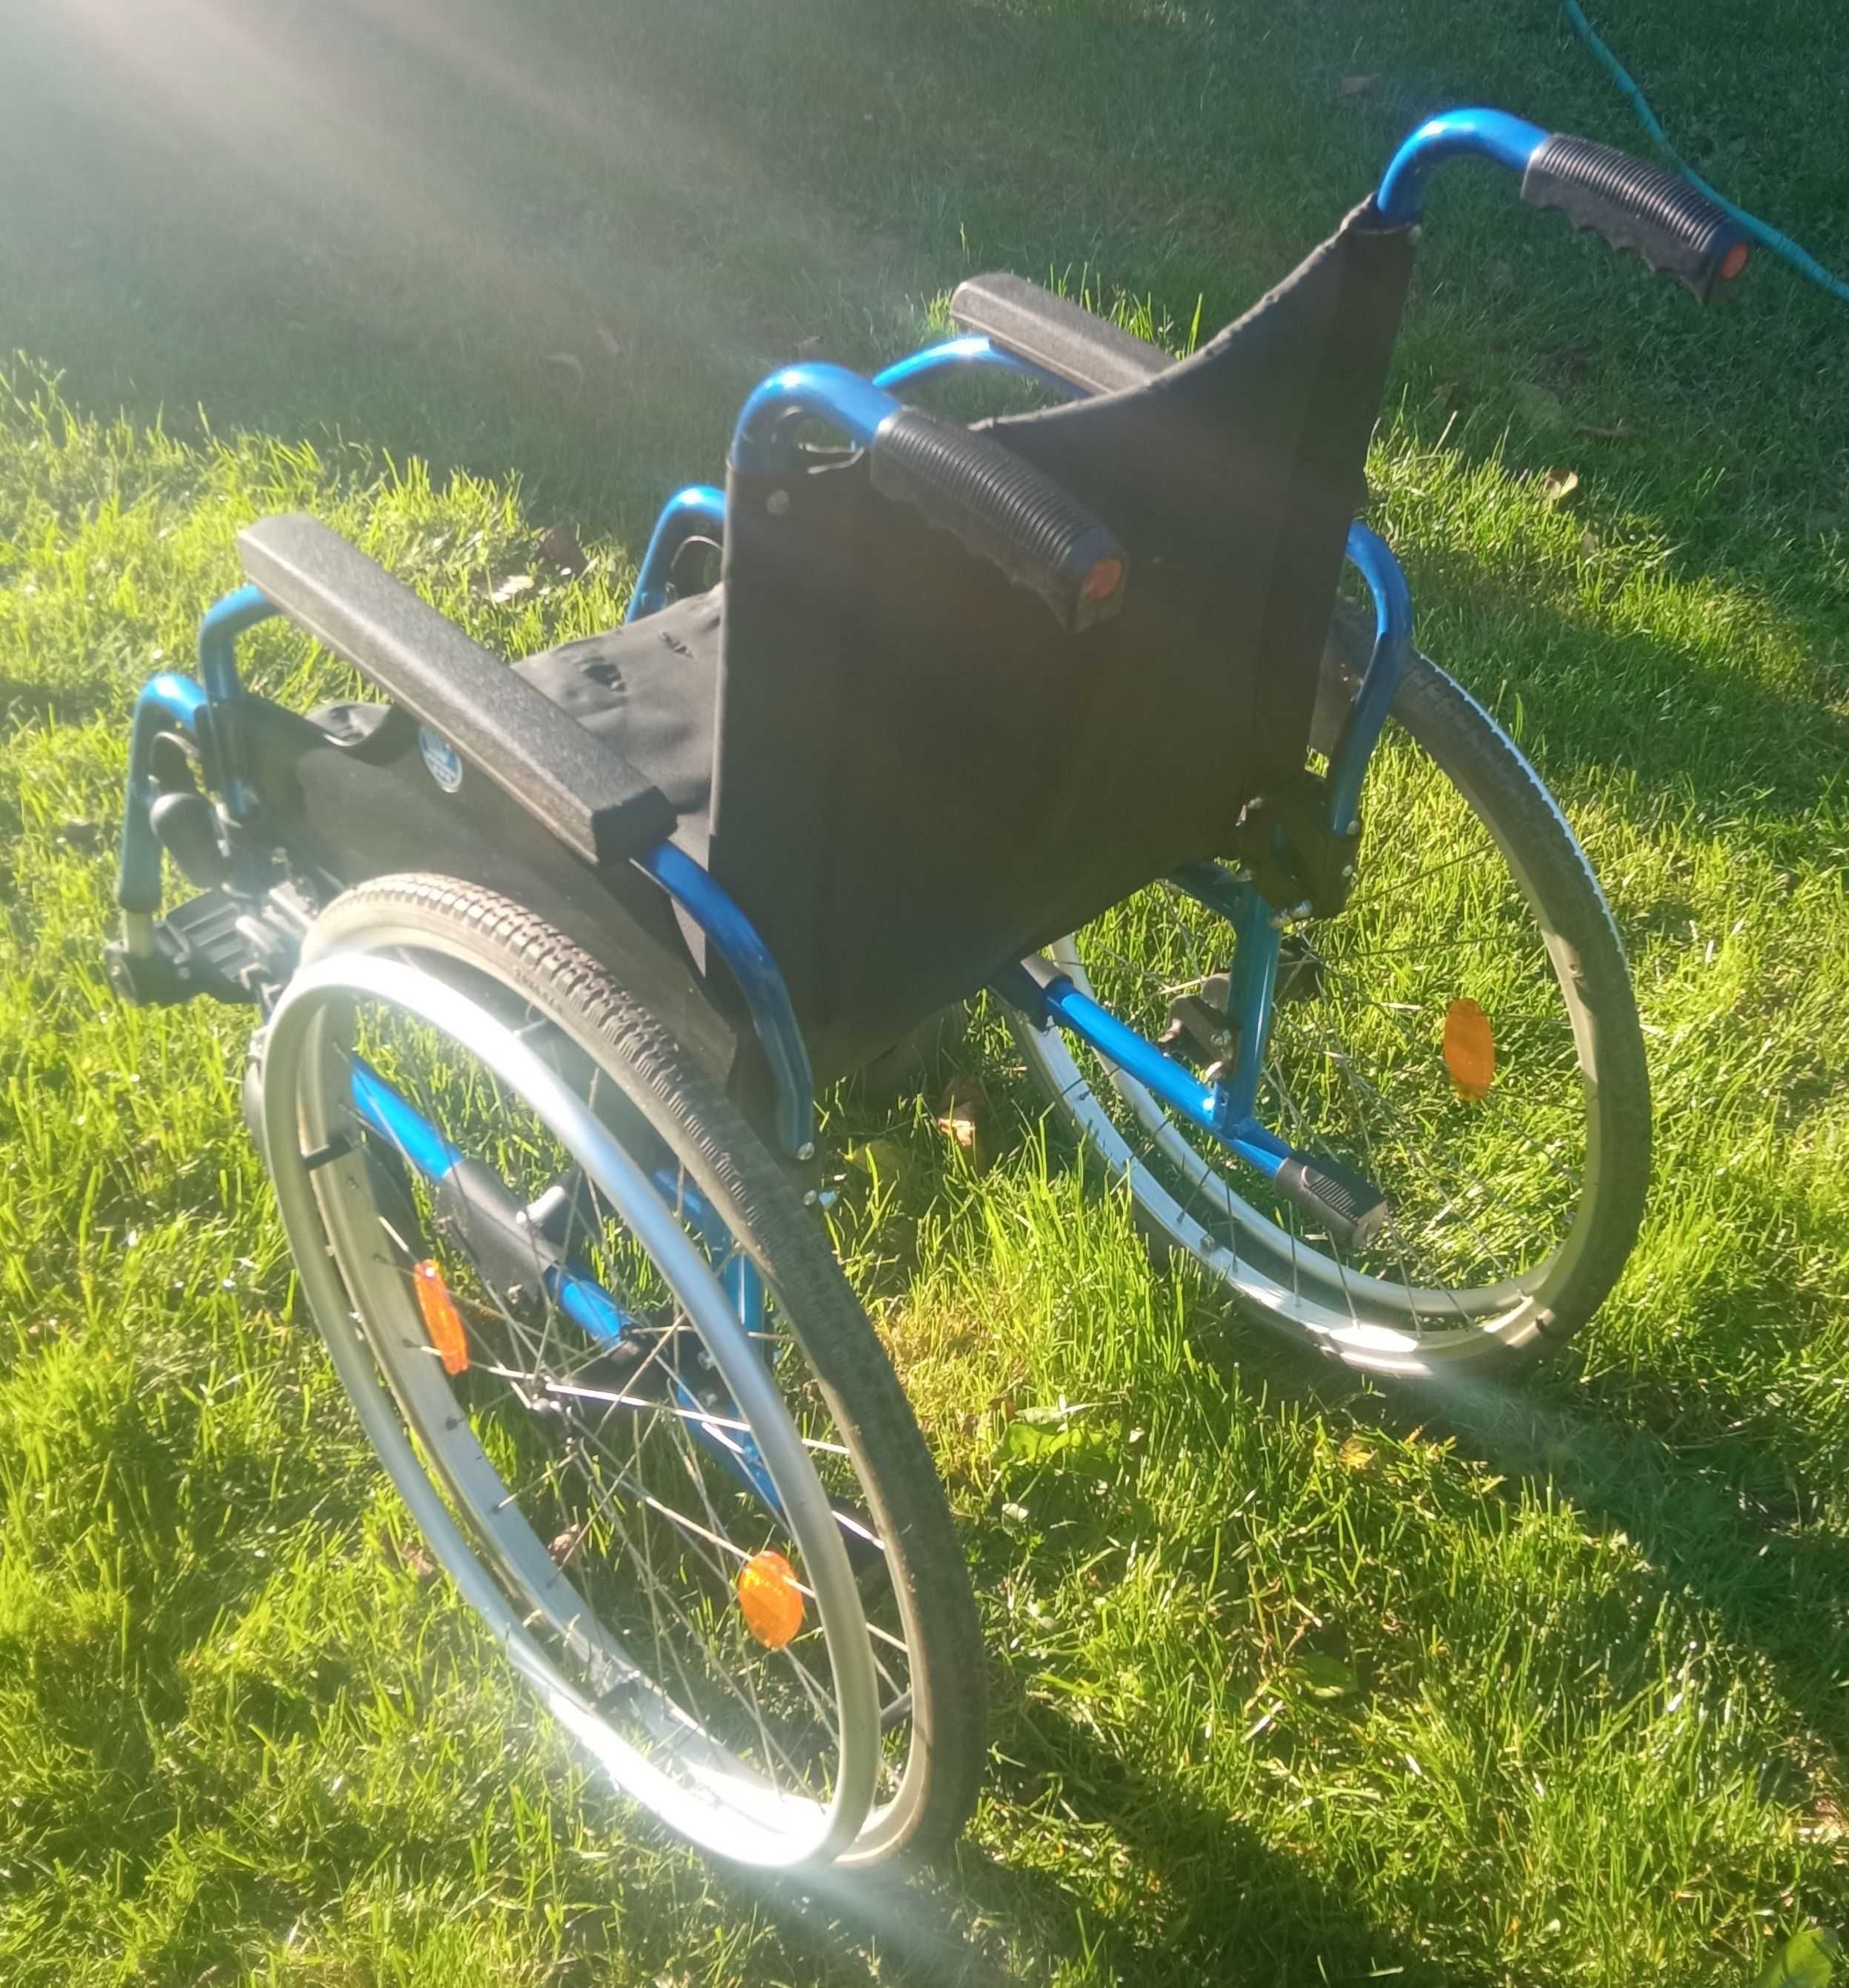 wózek inwalidzki firmy Vermeiren